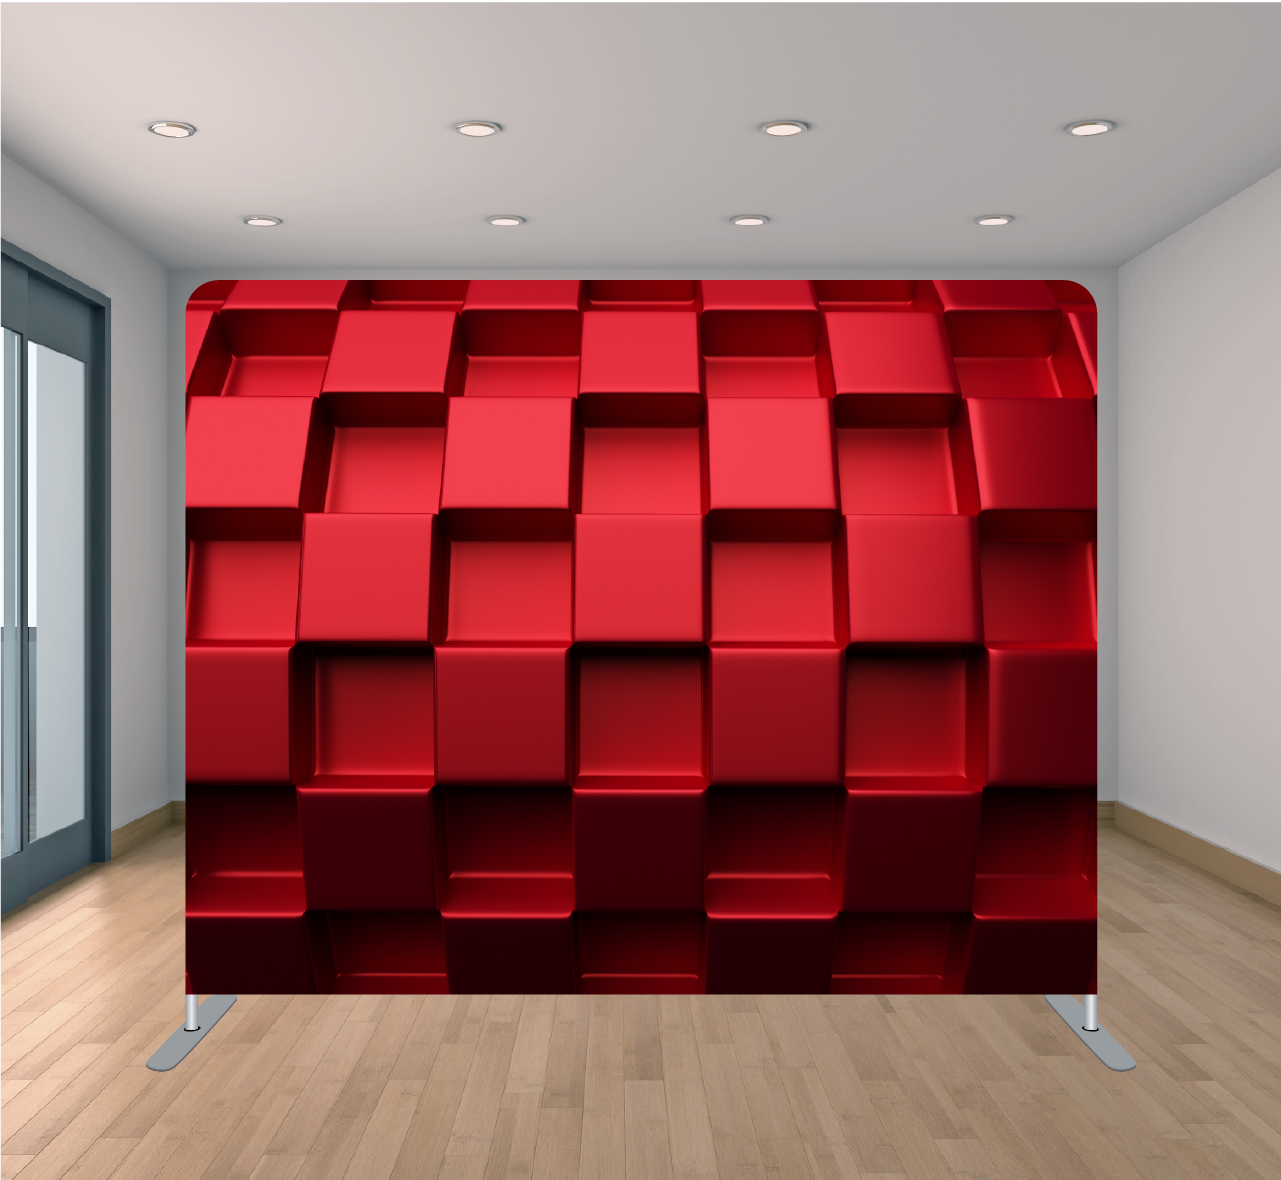 8X8ft Pillowcase Tension Backdrop- 3D Red Blocks